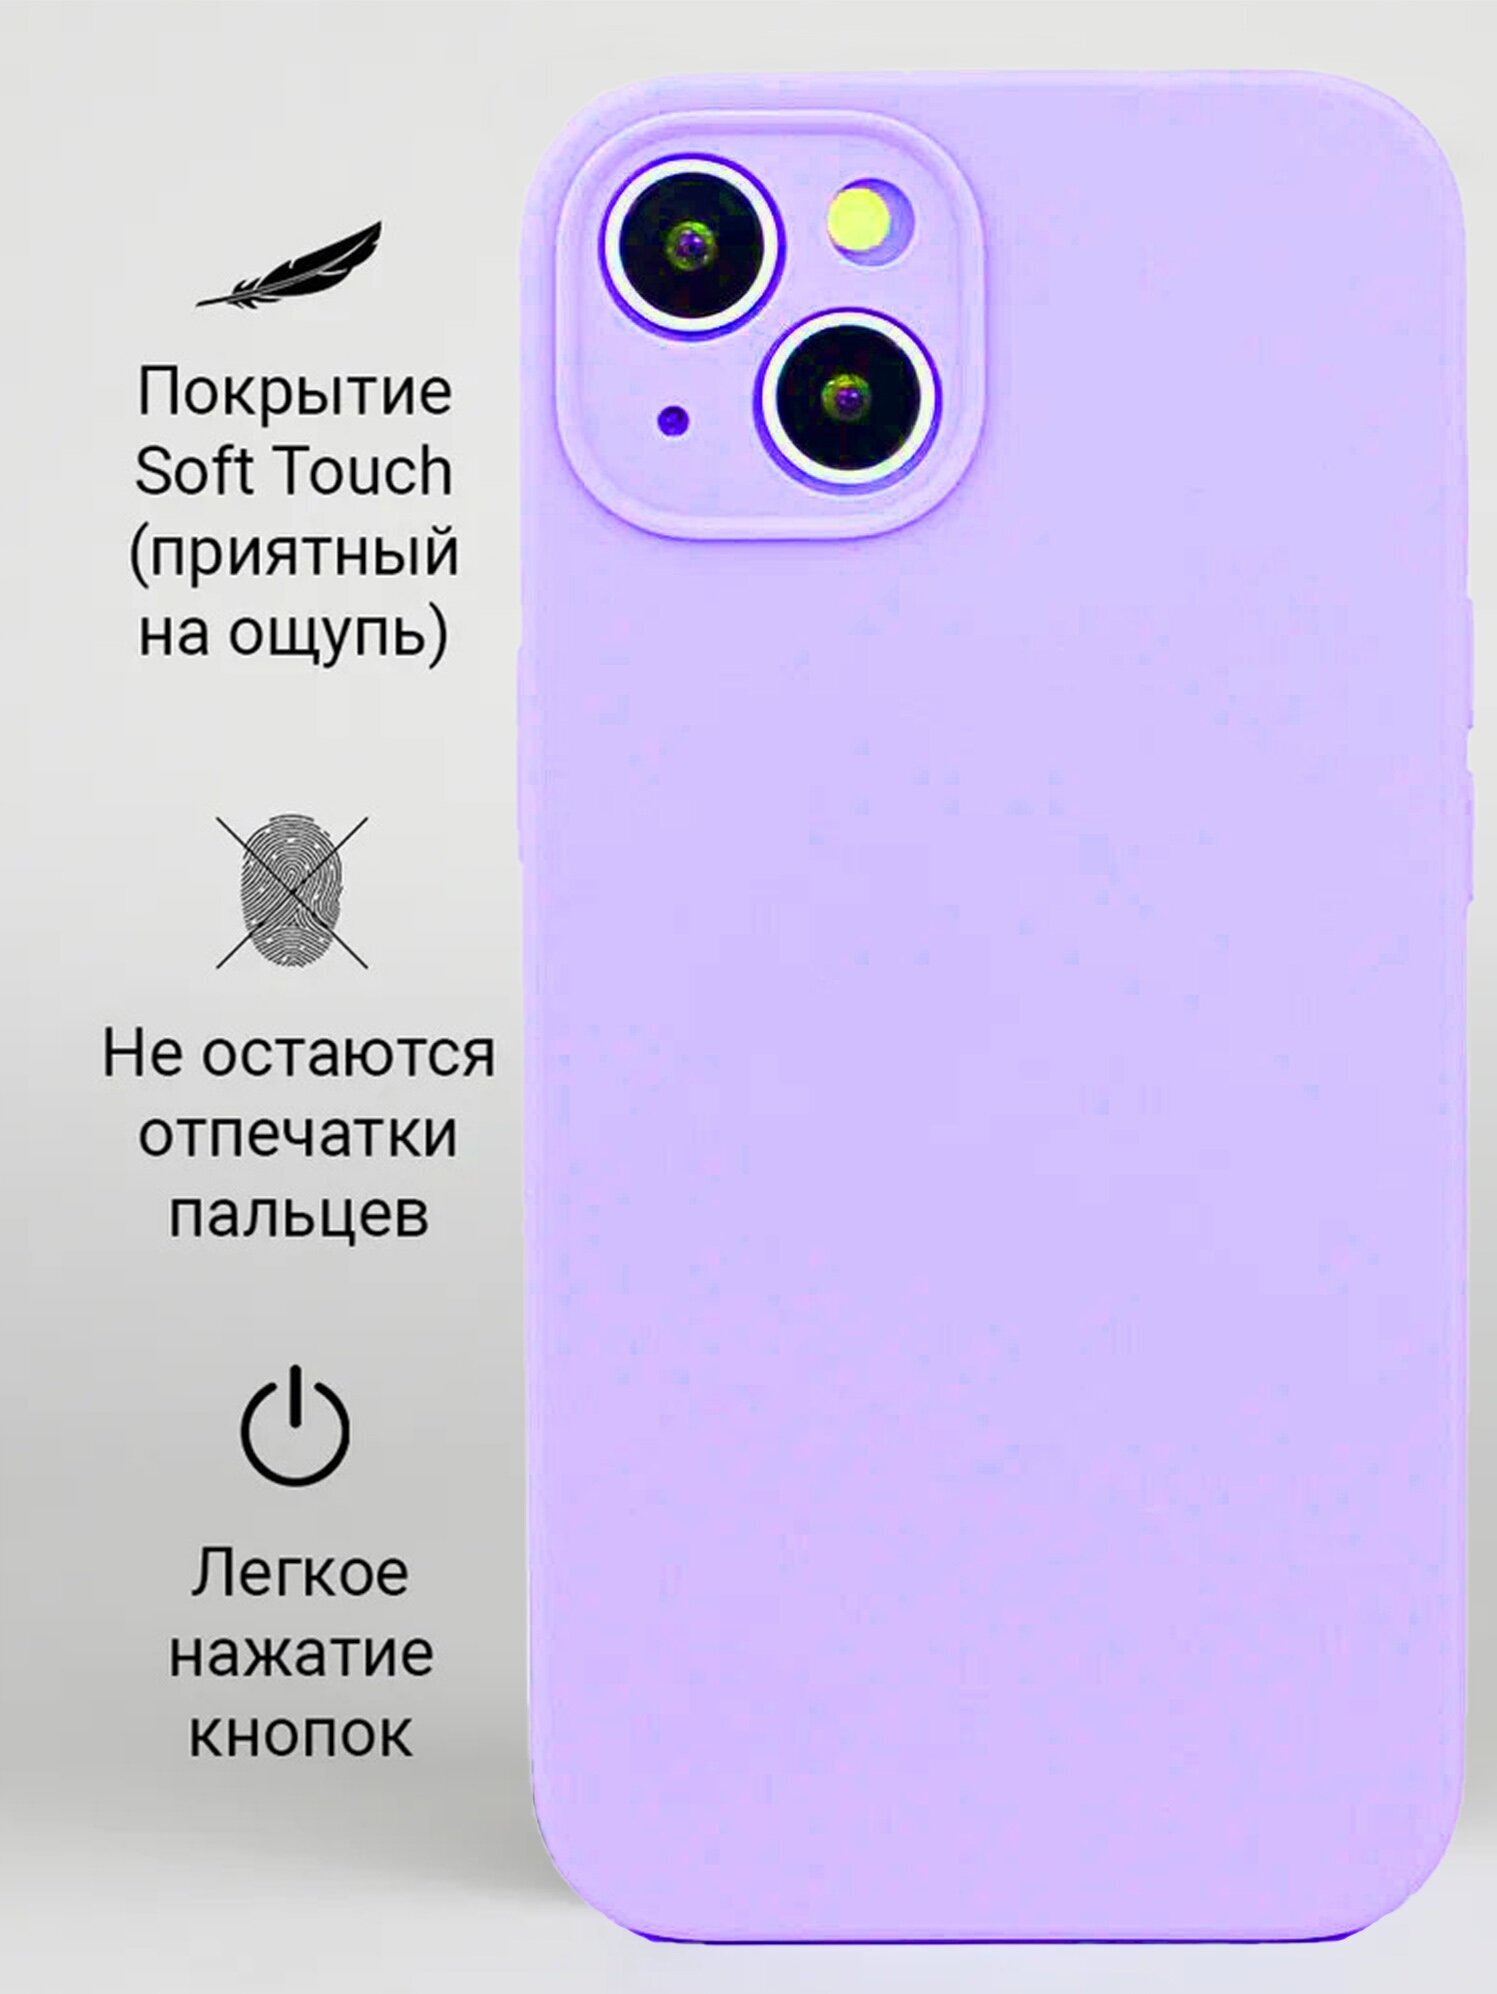 Чехол uBear Touch case для iPhone 13 , силикон soft touch, фиолетовый